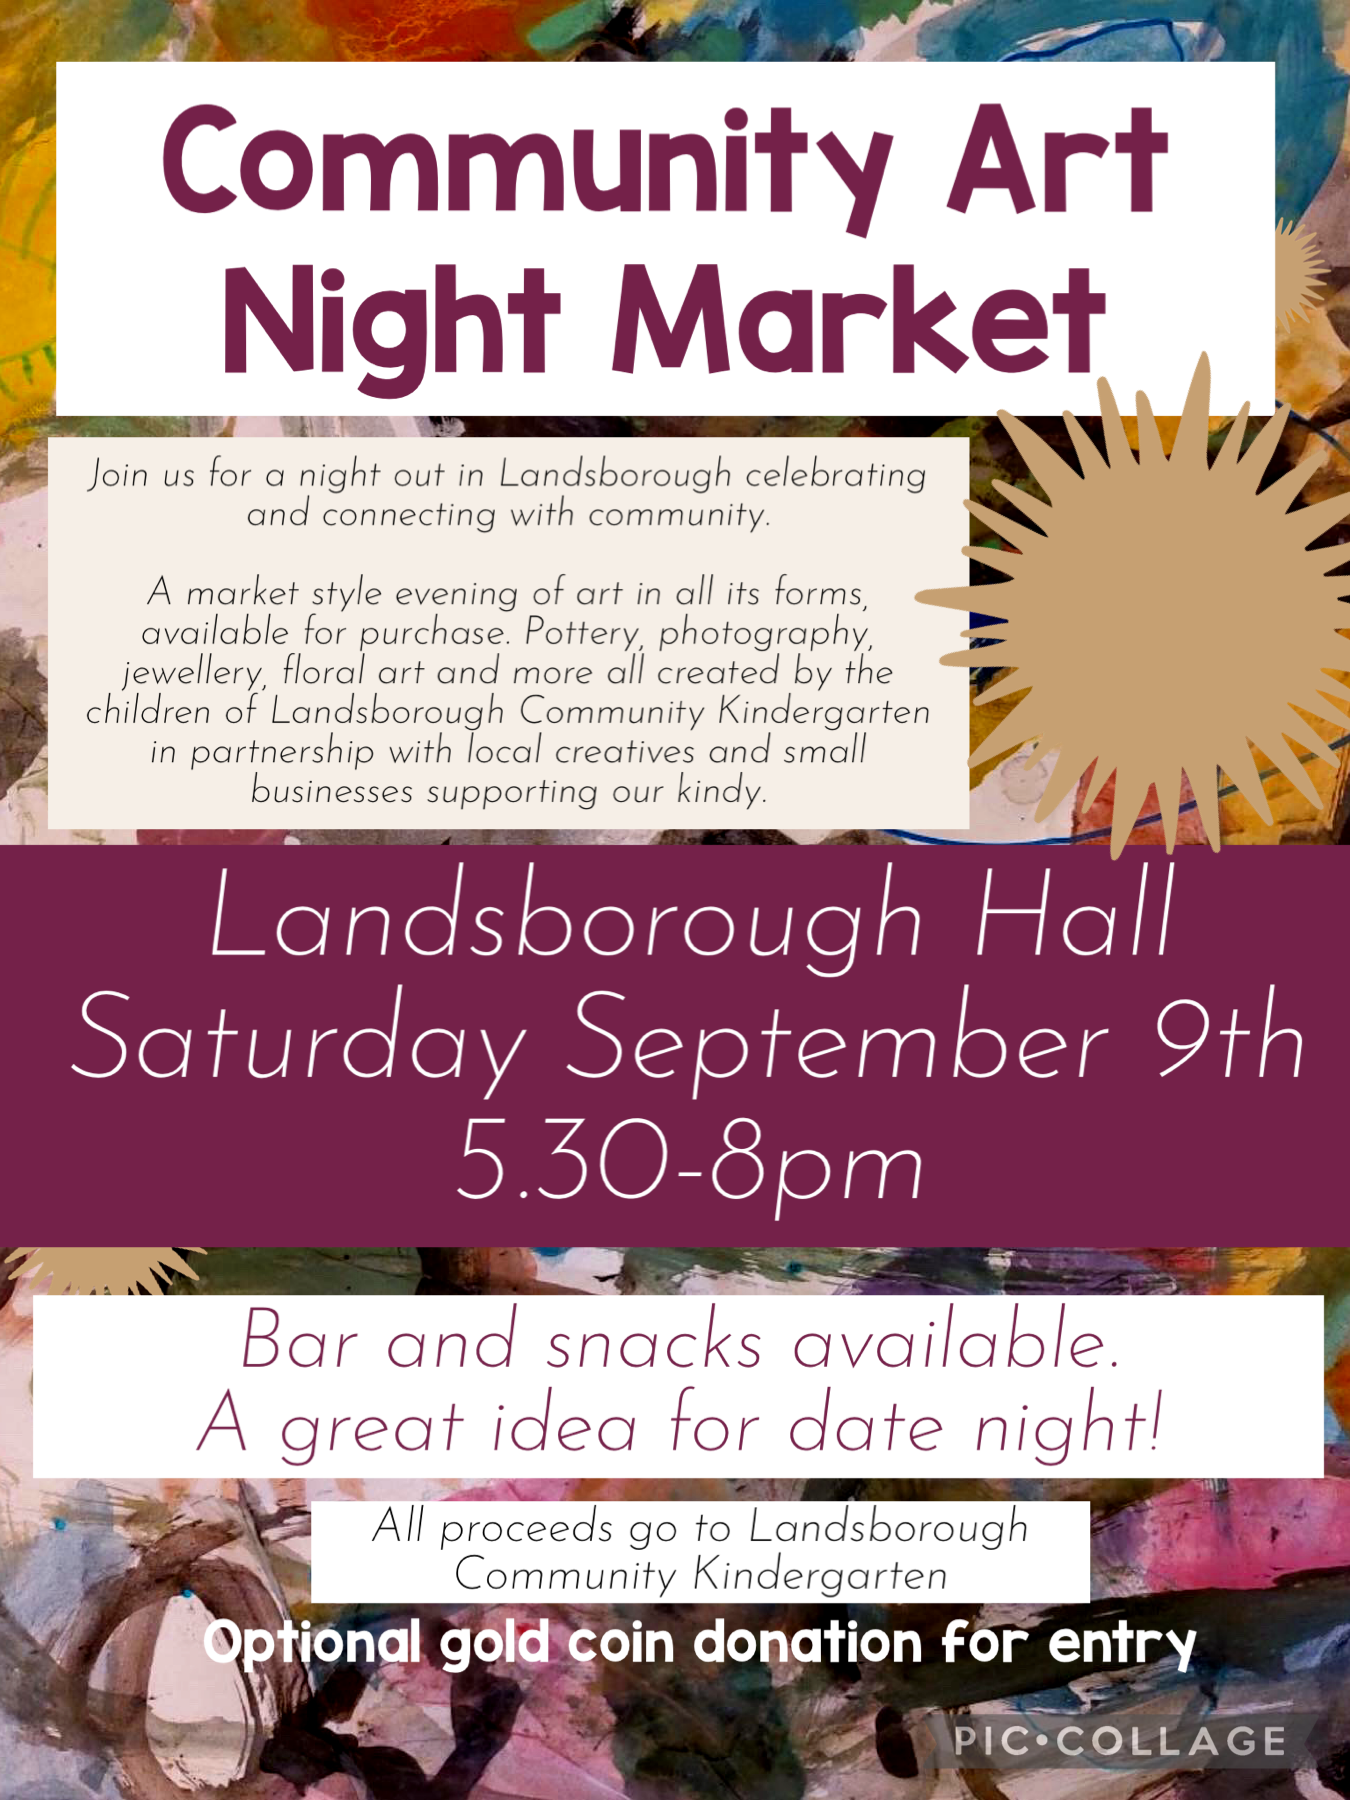 Community Art Night Market- Landsborough Community Kindergarten